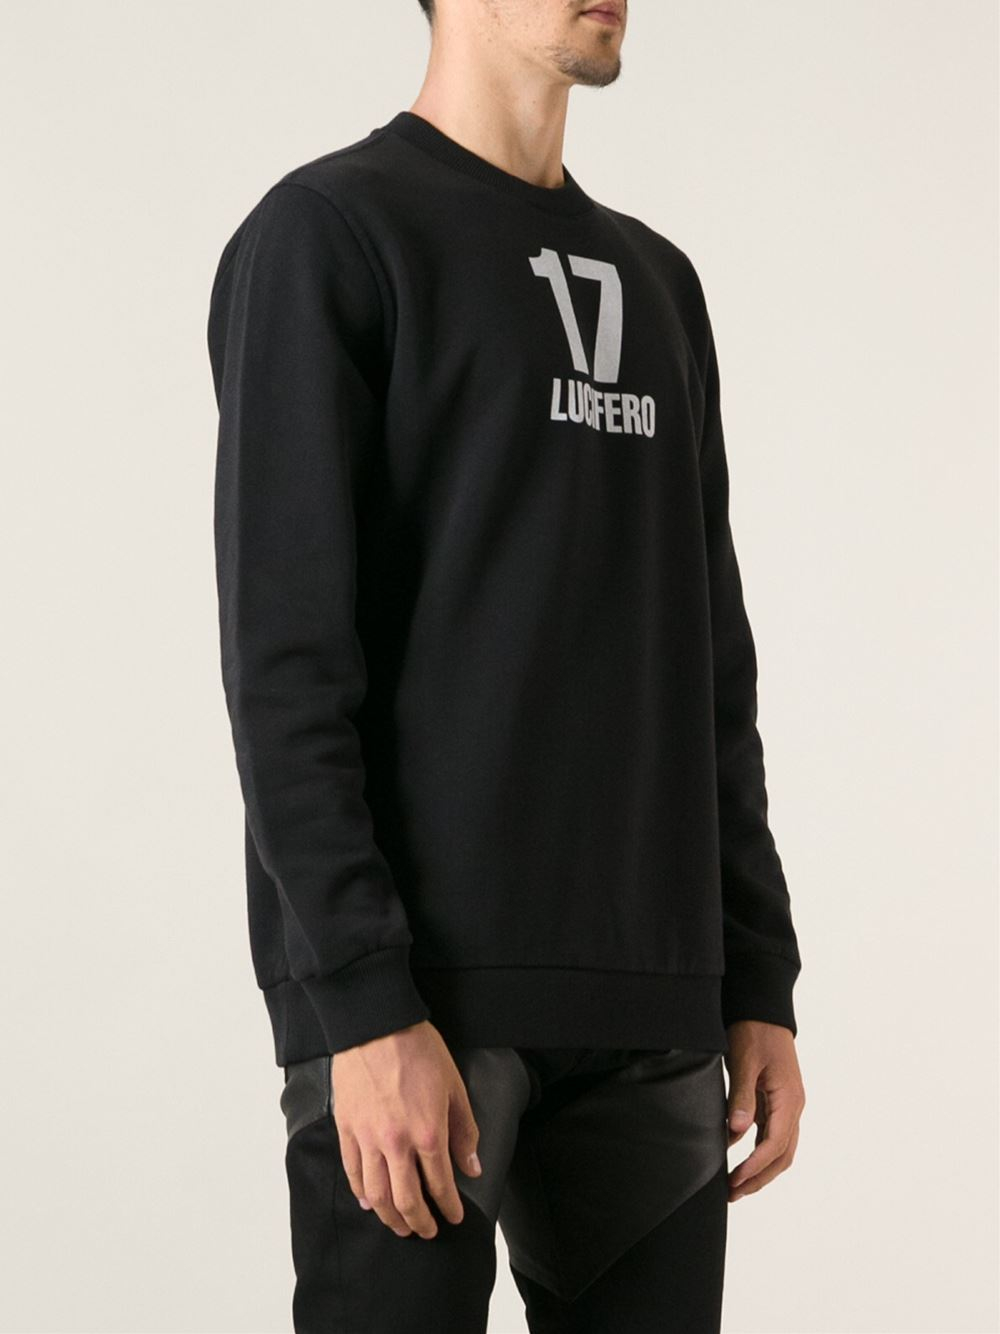 Givenchy Crew Neck Sweatshirt in Black for Men | Lyst